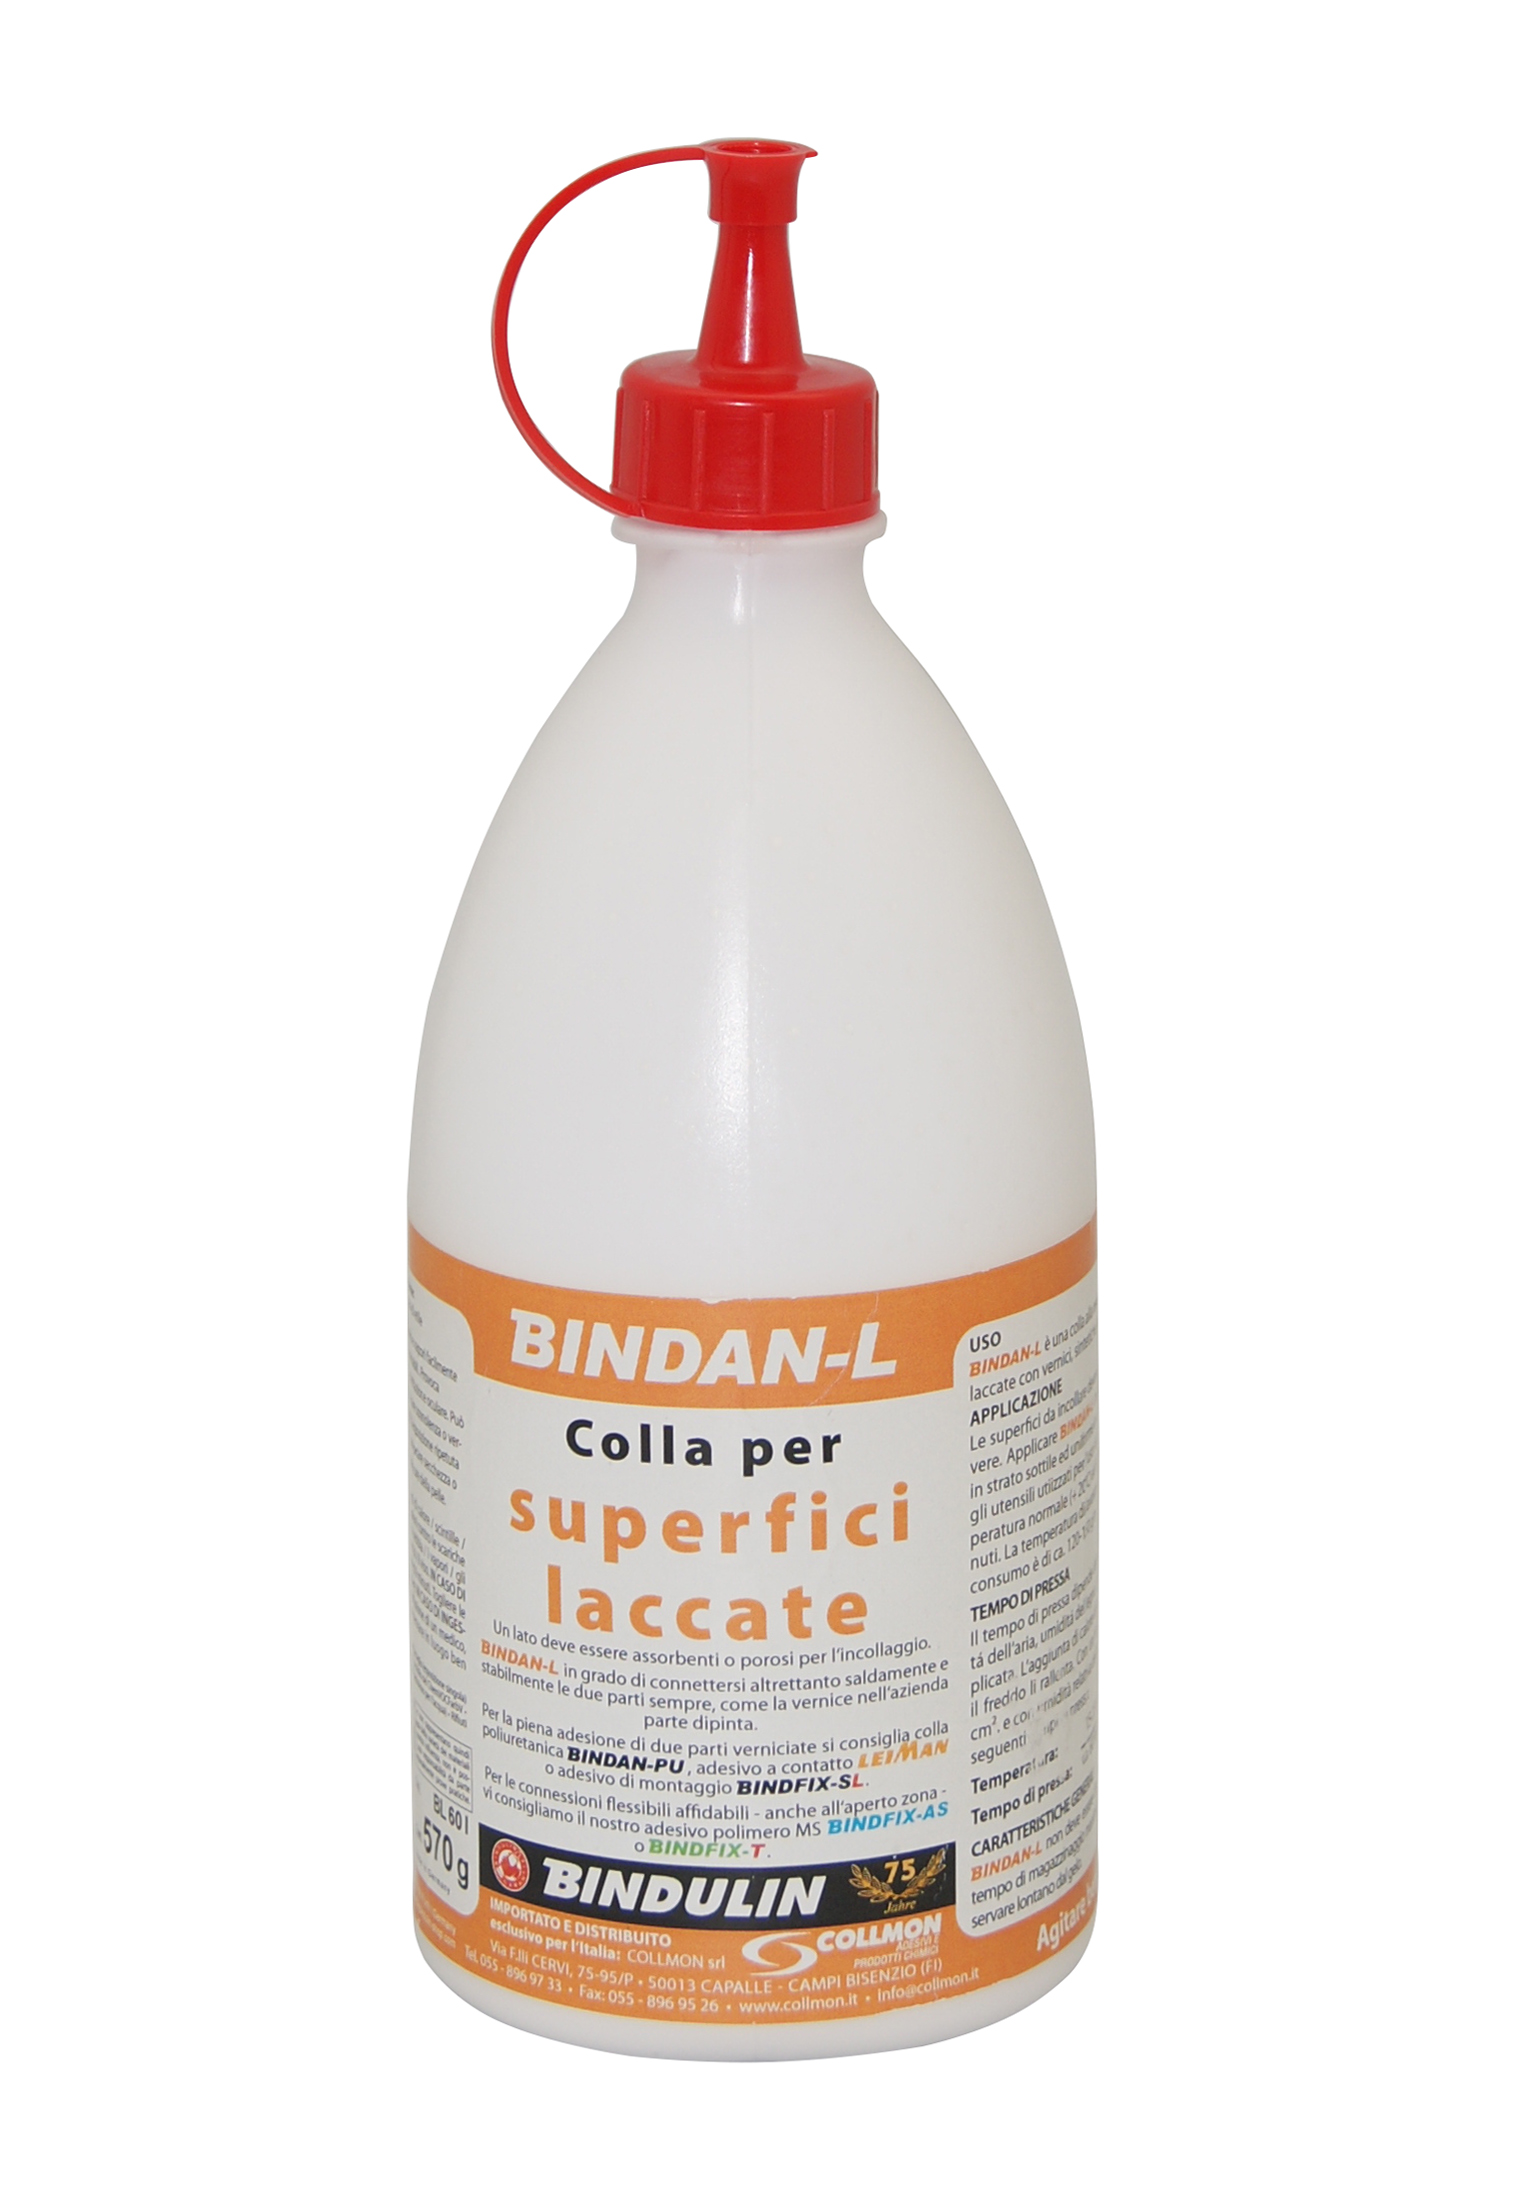 Bindulin - bindan-l vinilico trasparente 570 g